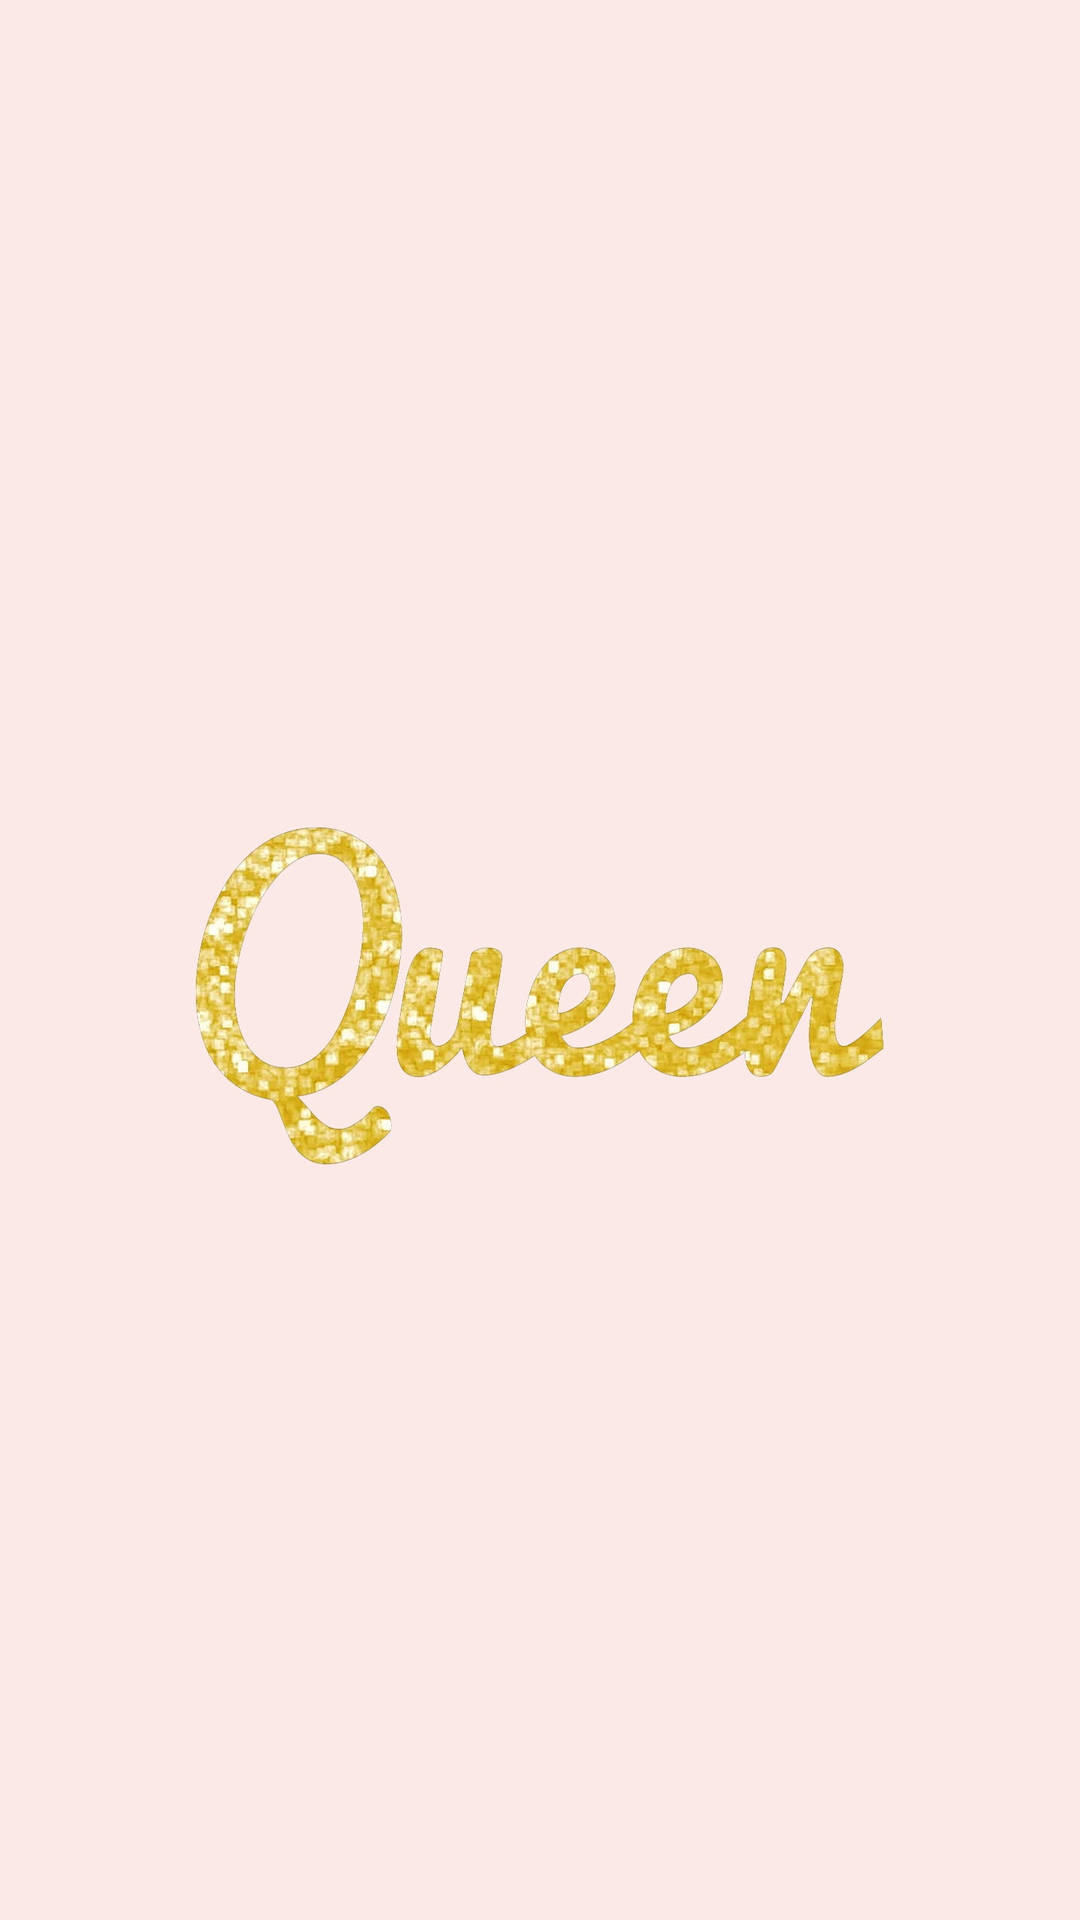 Goldglitter Königin Weiblich Wallpaper